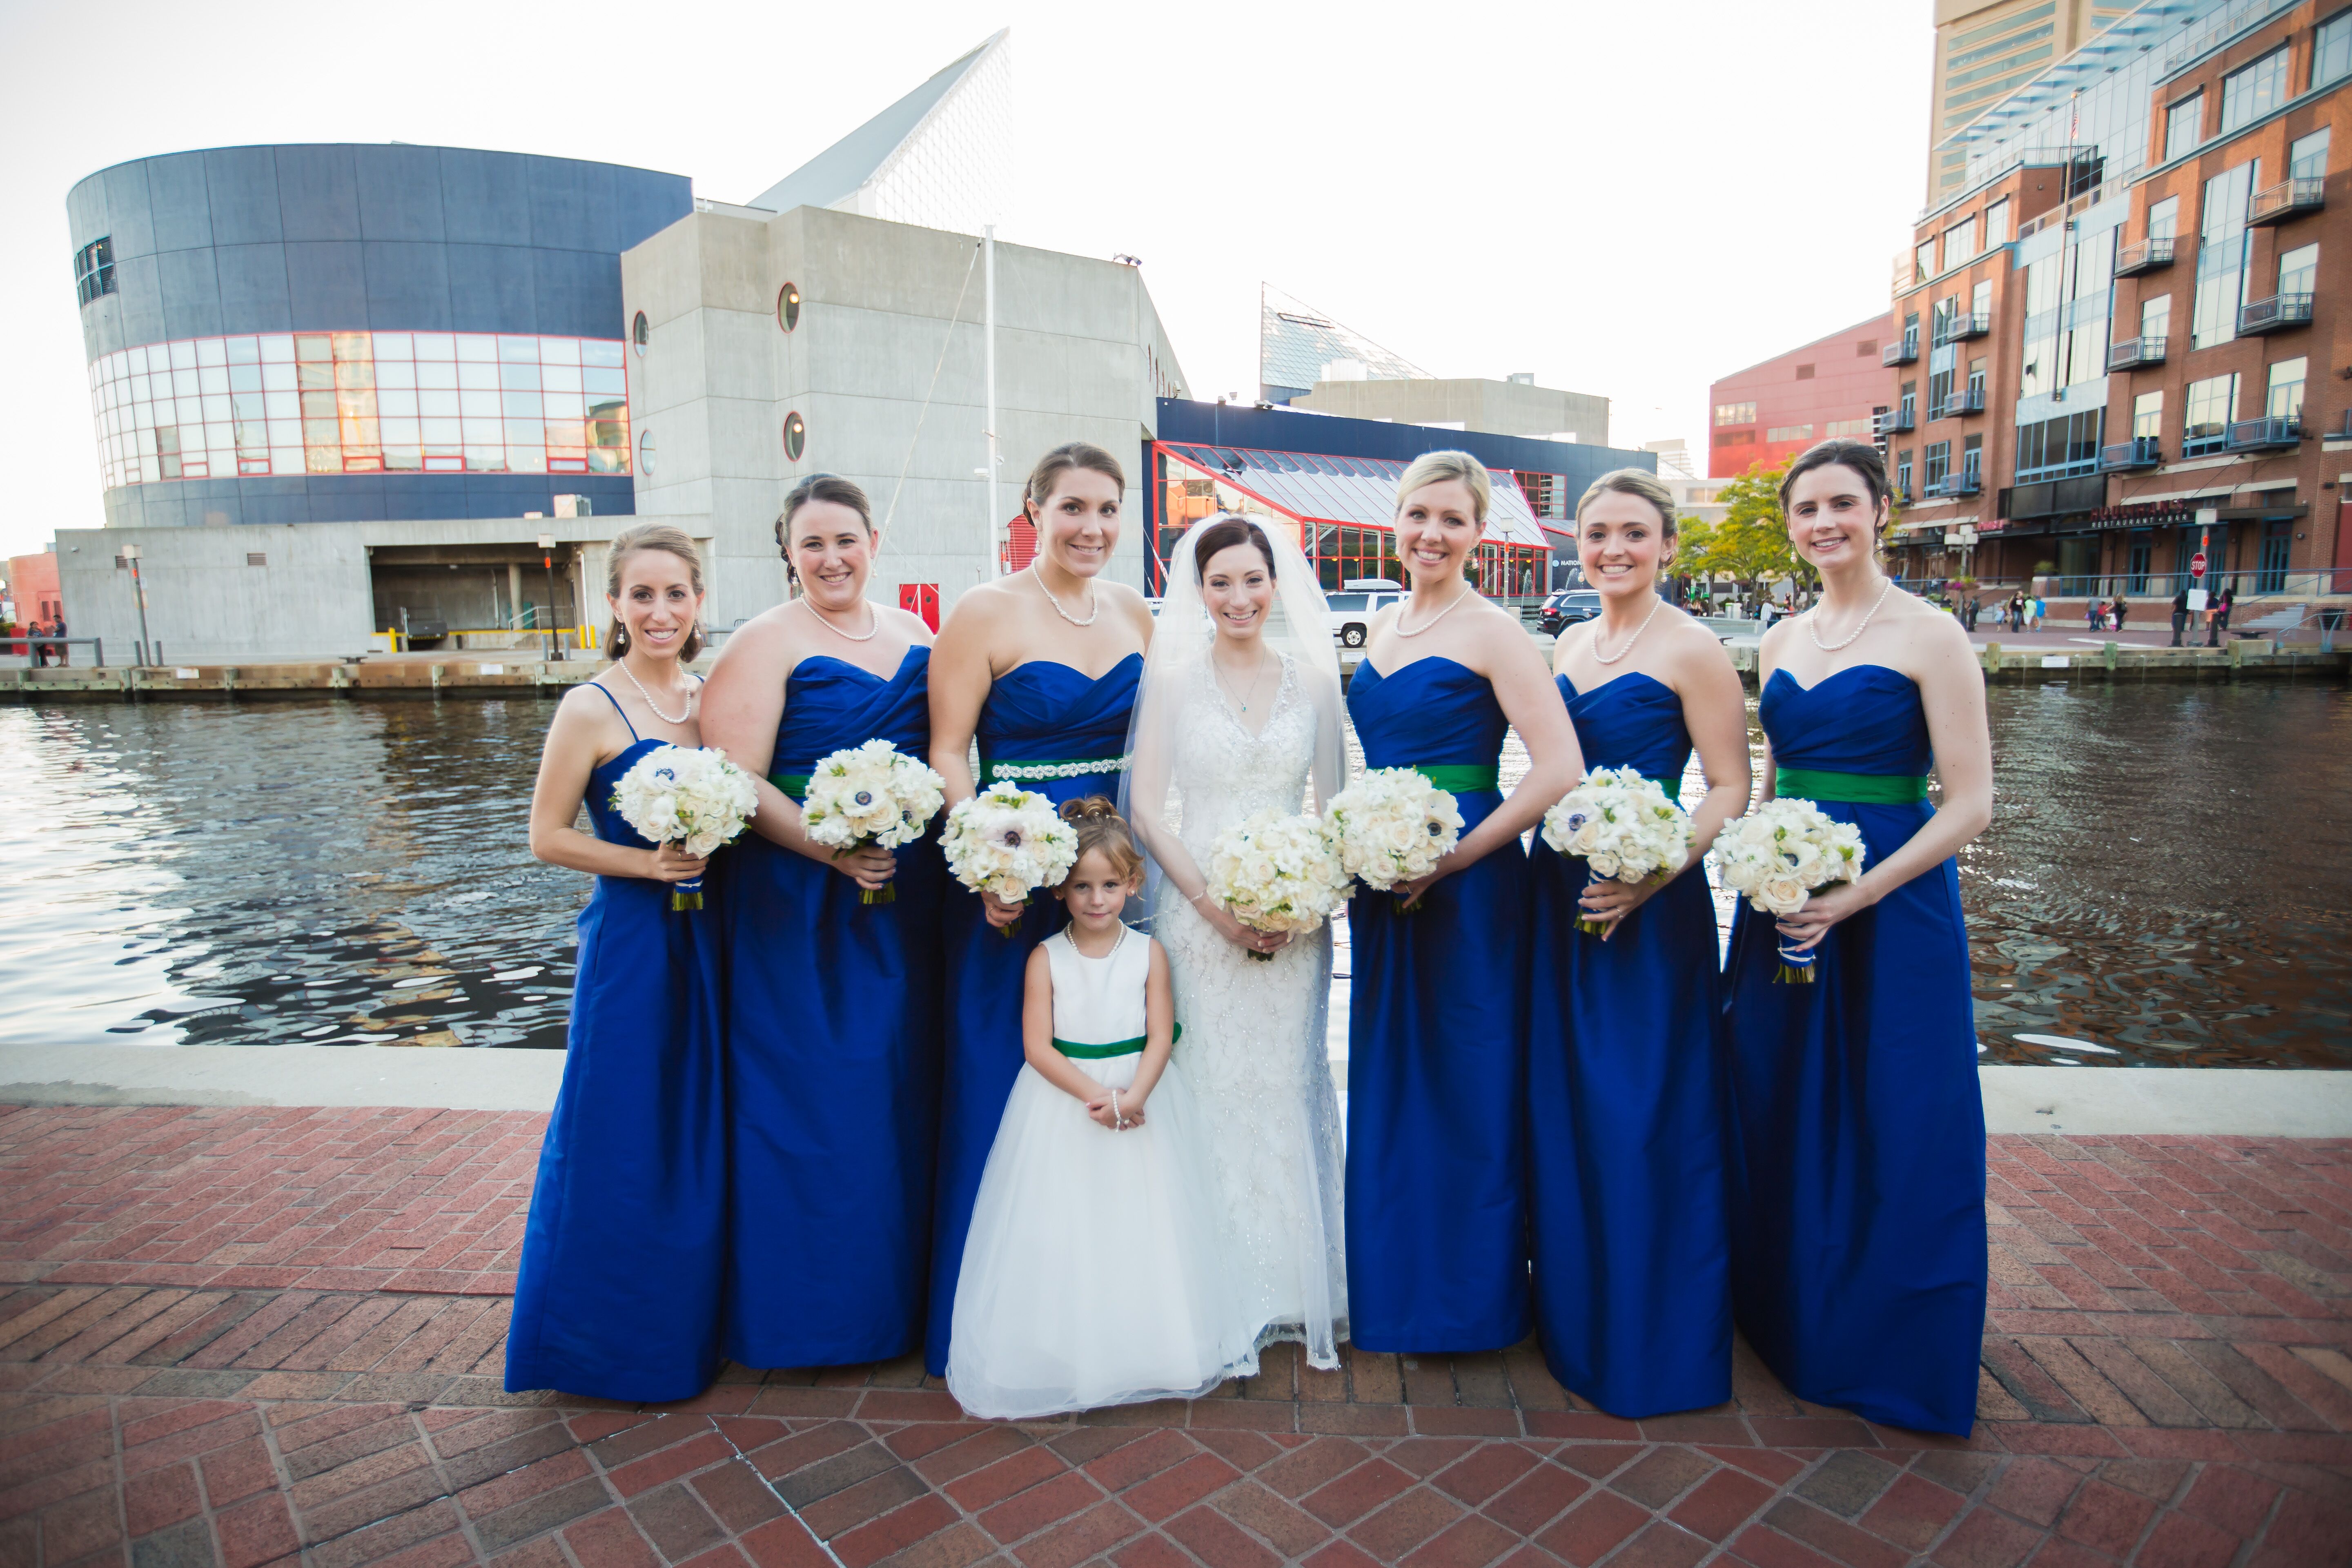 sapphire blue bridesmaid dresses for cheap